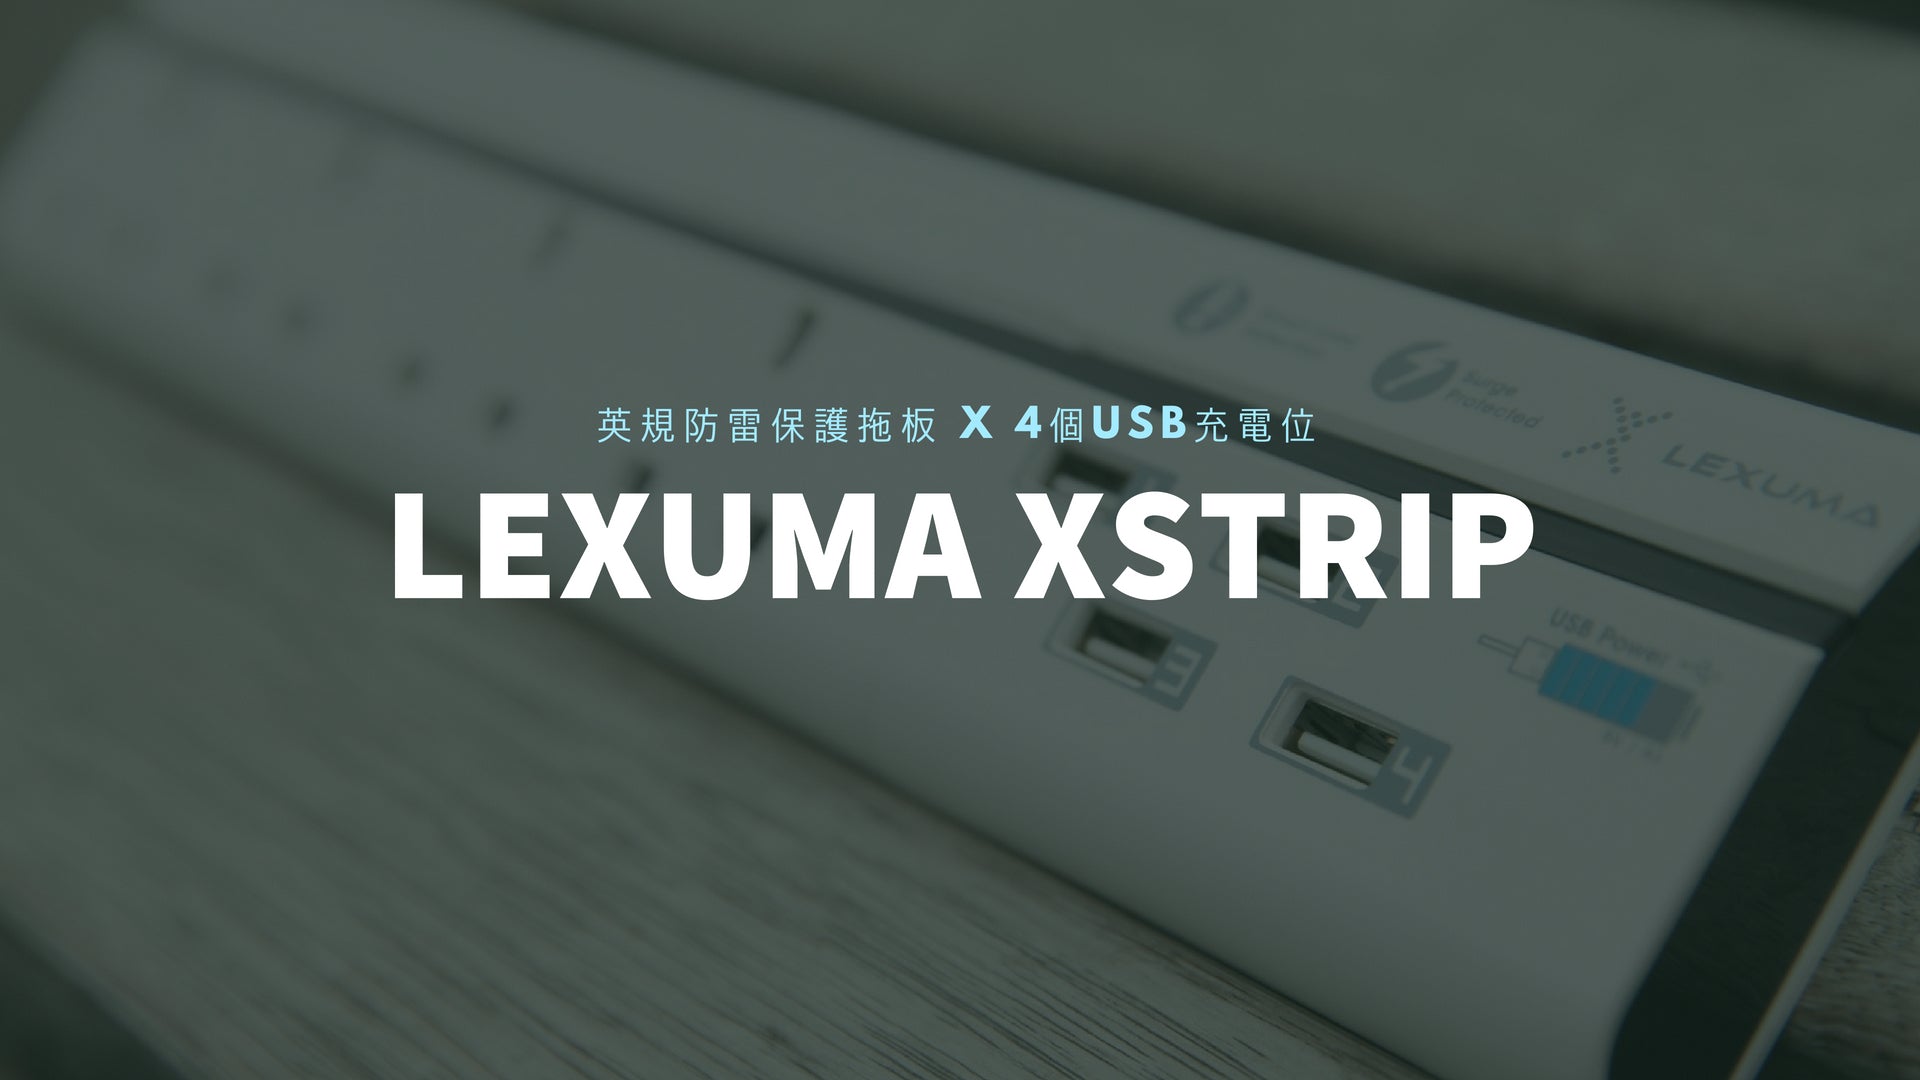 Lexuma 辣數碼 XStrip 防雷保護拖板連USB